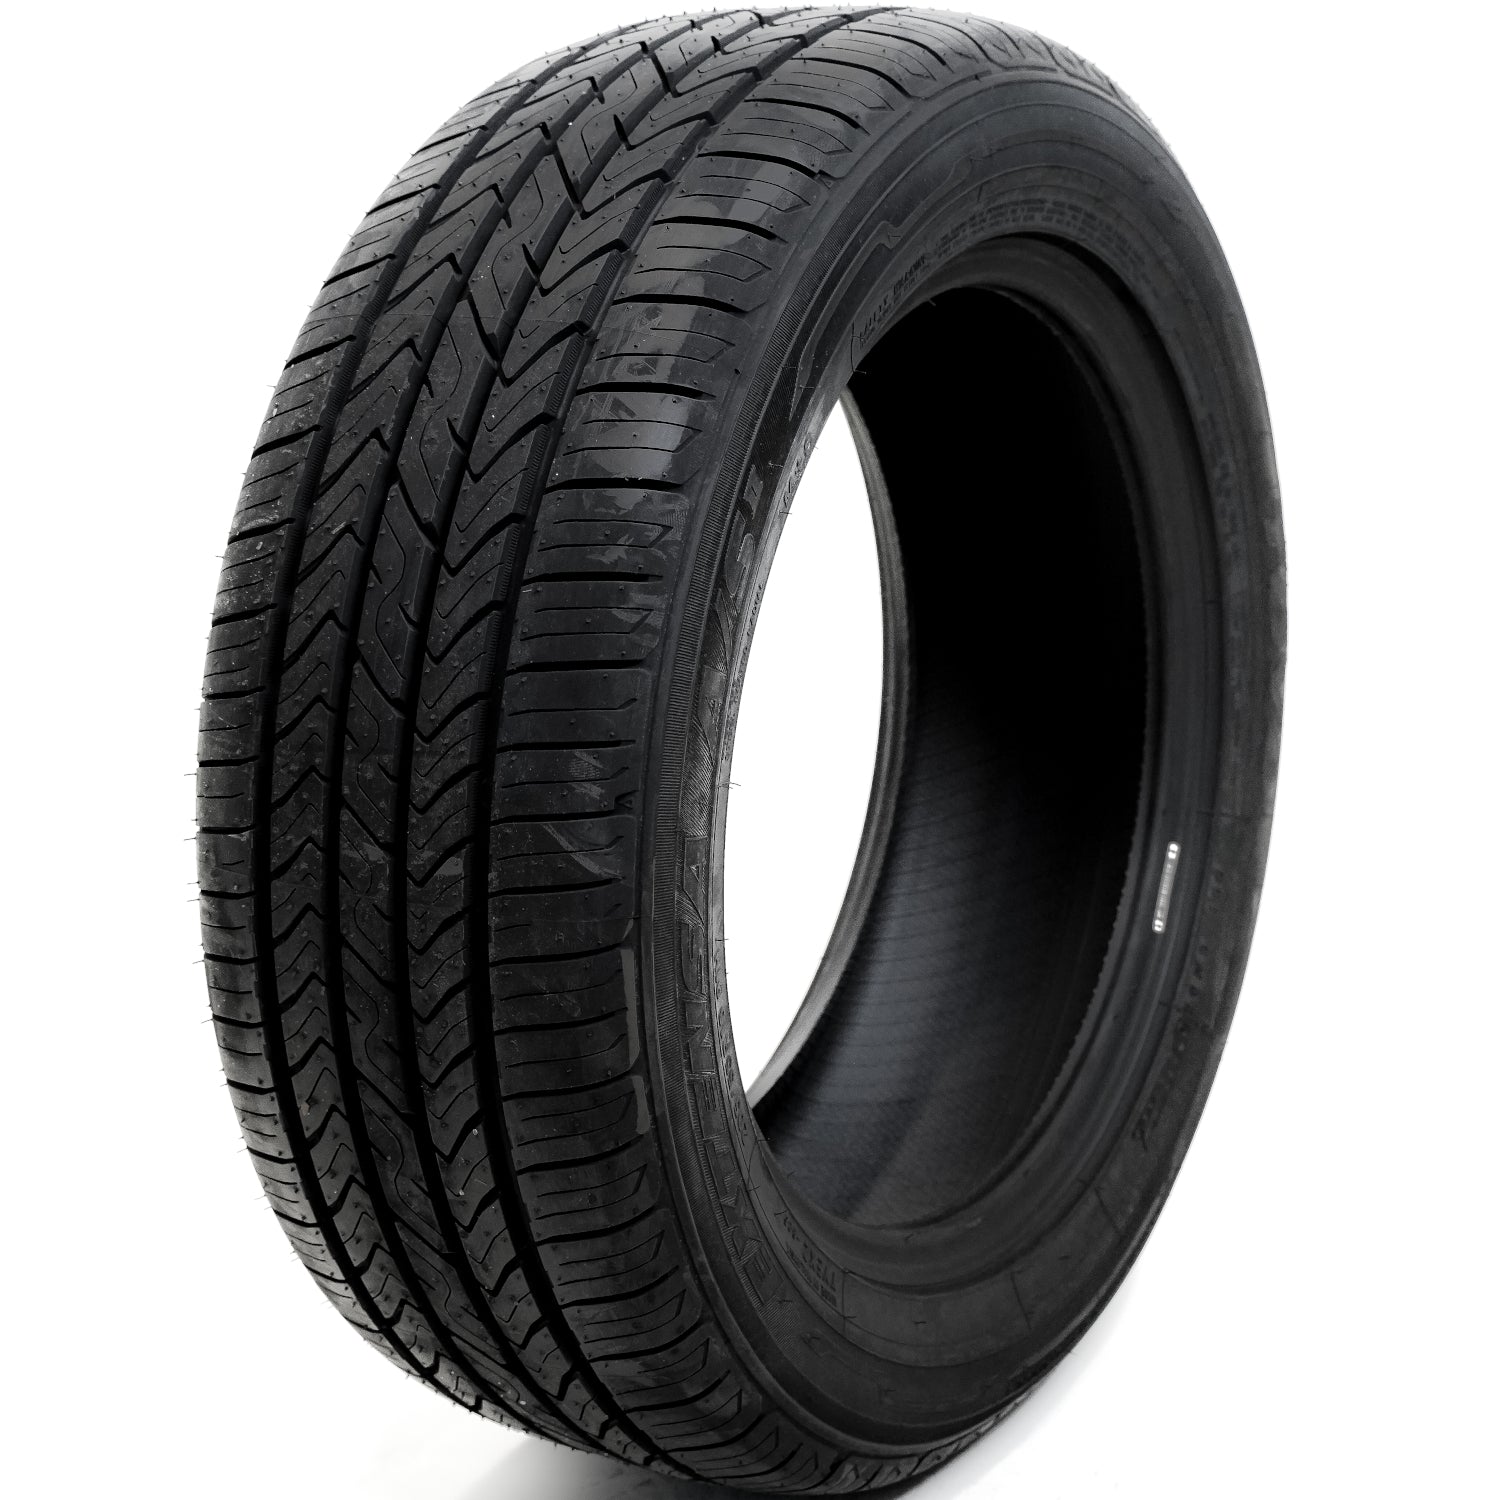 TOYO TIRES EXTENSA A/S II 225/60R16 (26.6X8.9R 16) Tires